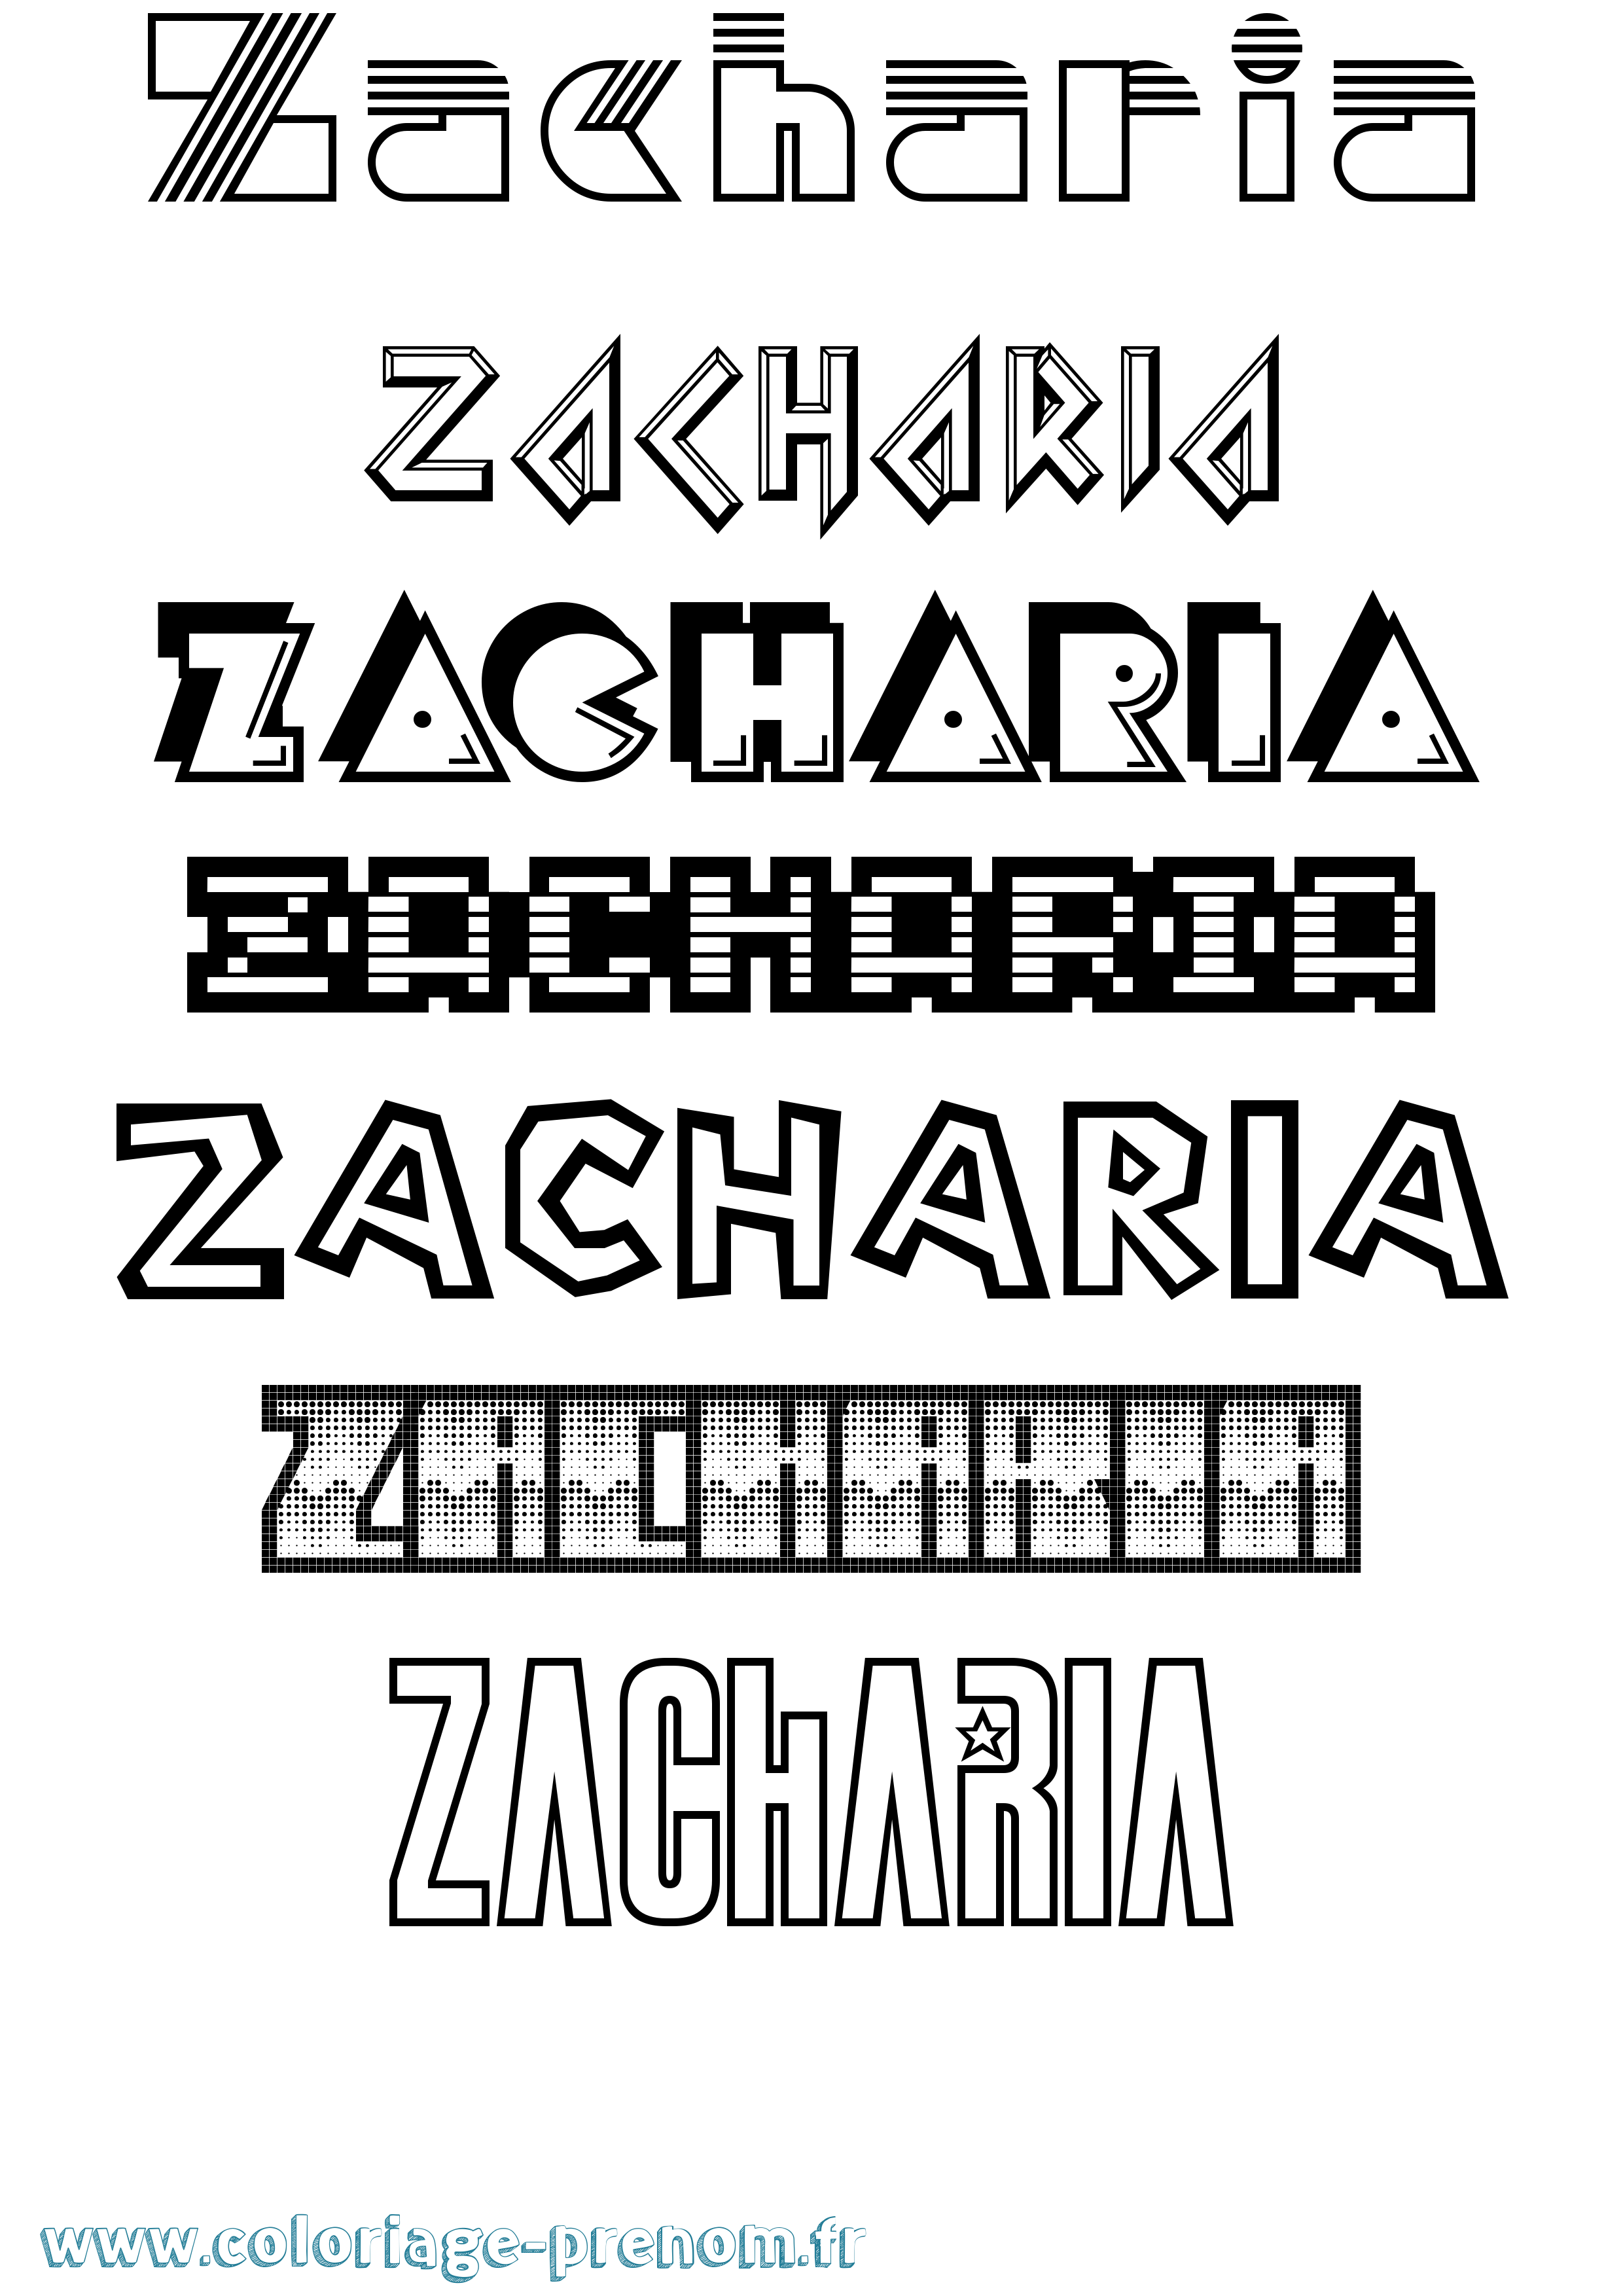 Coloriage prénom Zacharia